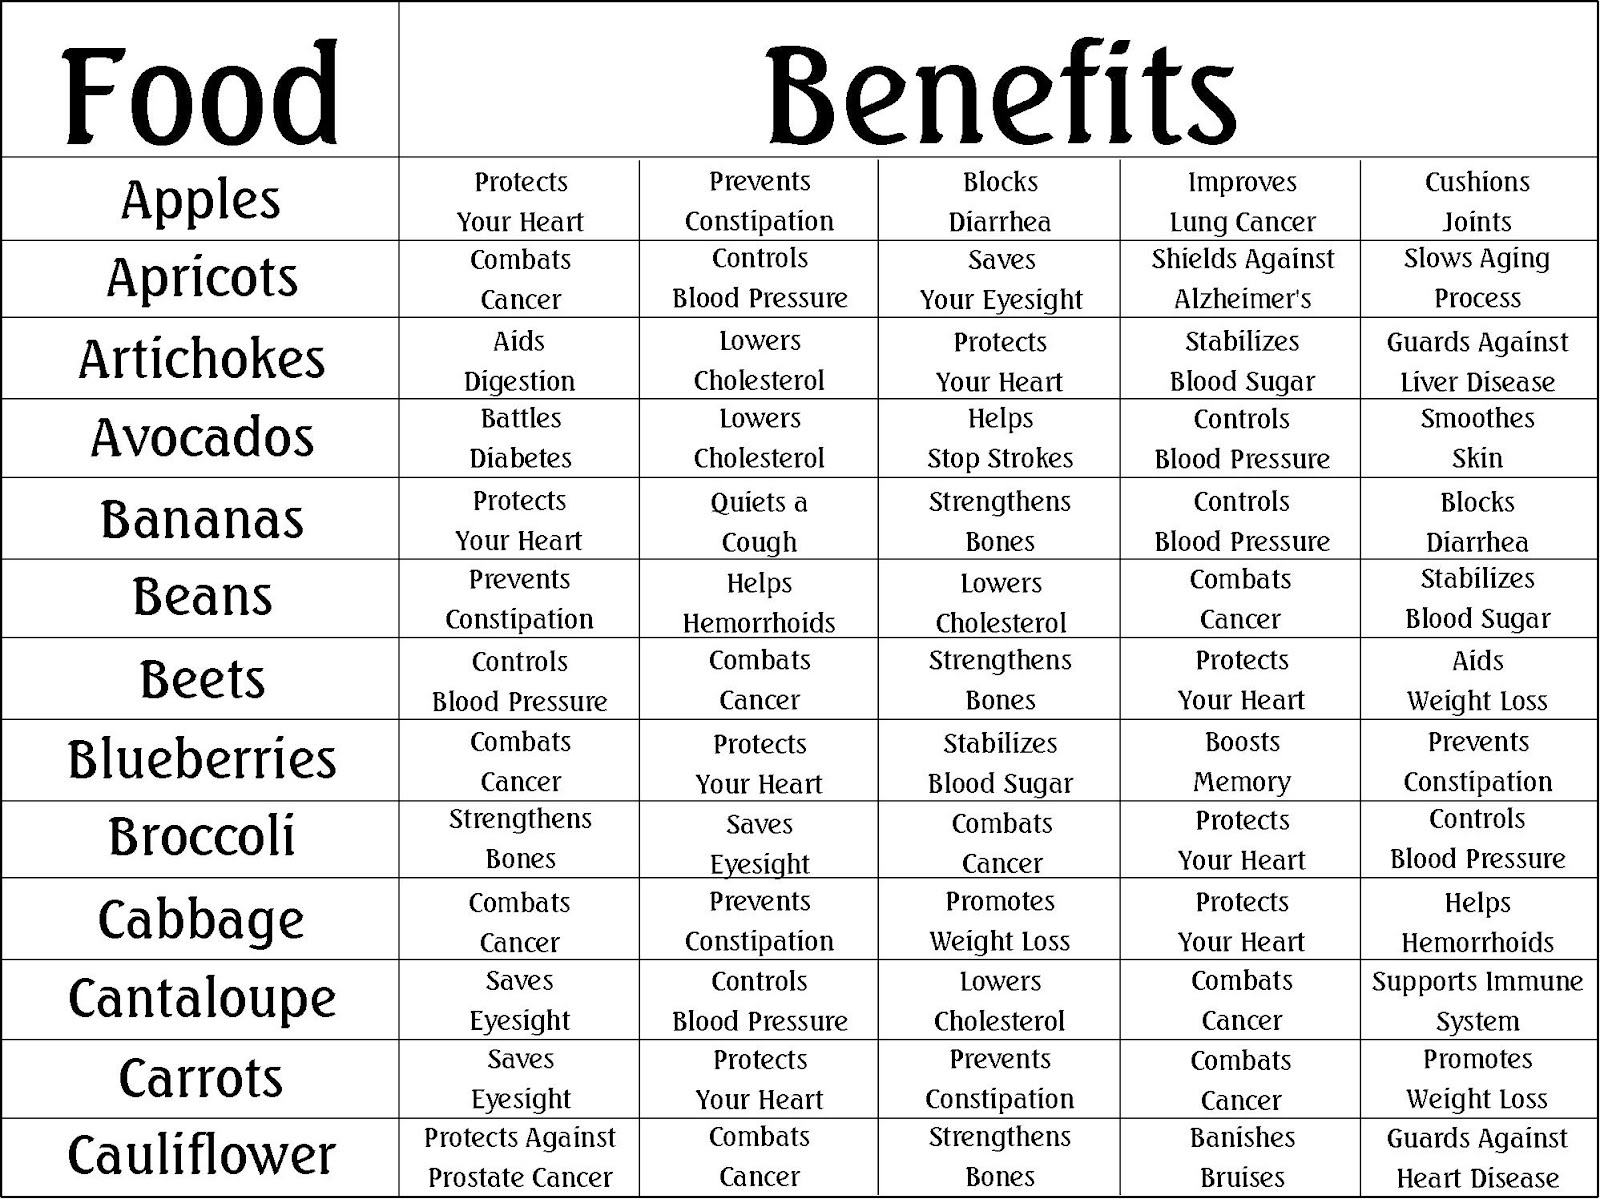 Benefits Chart